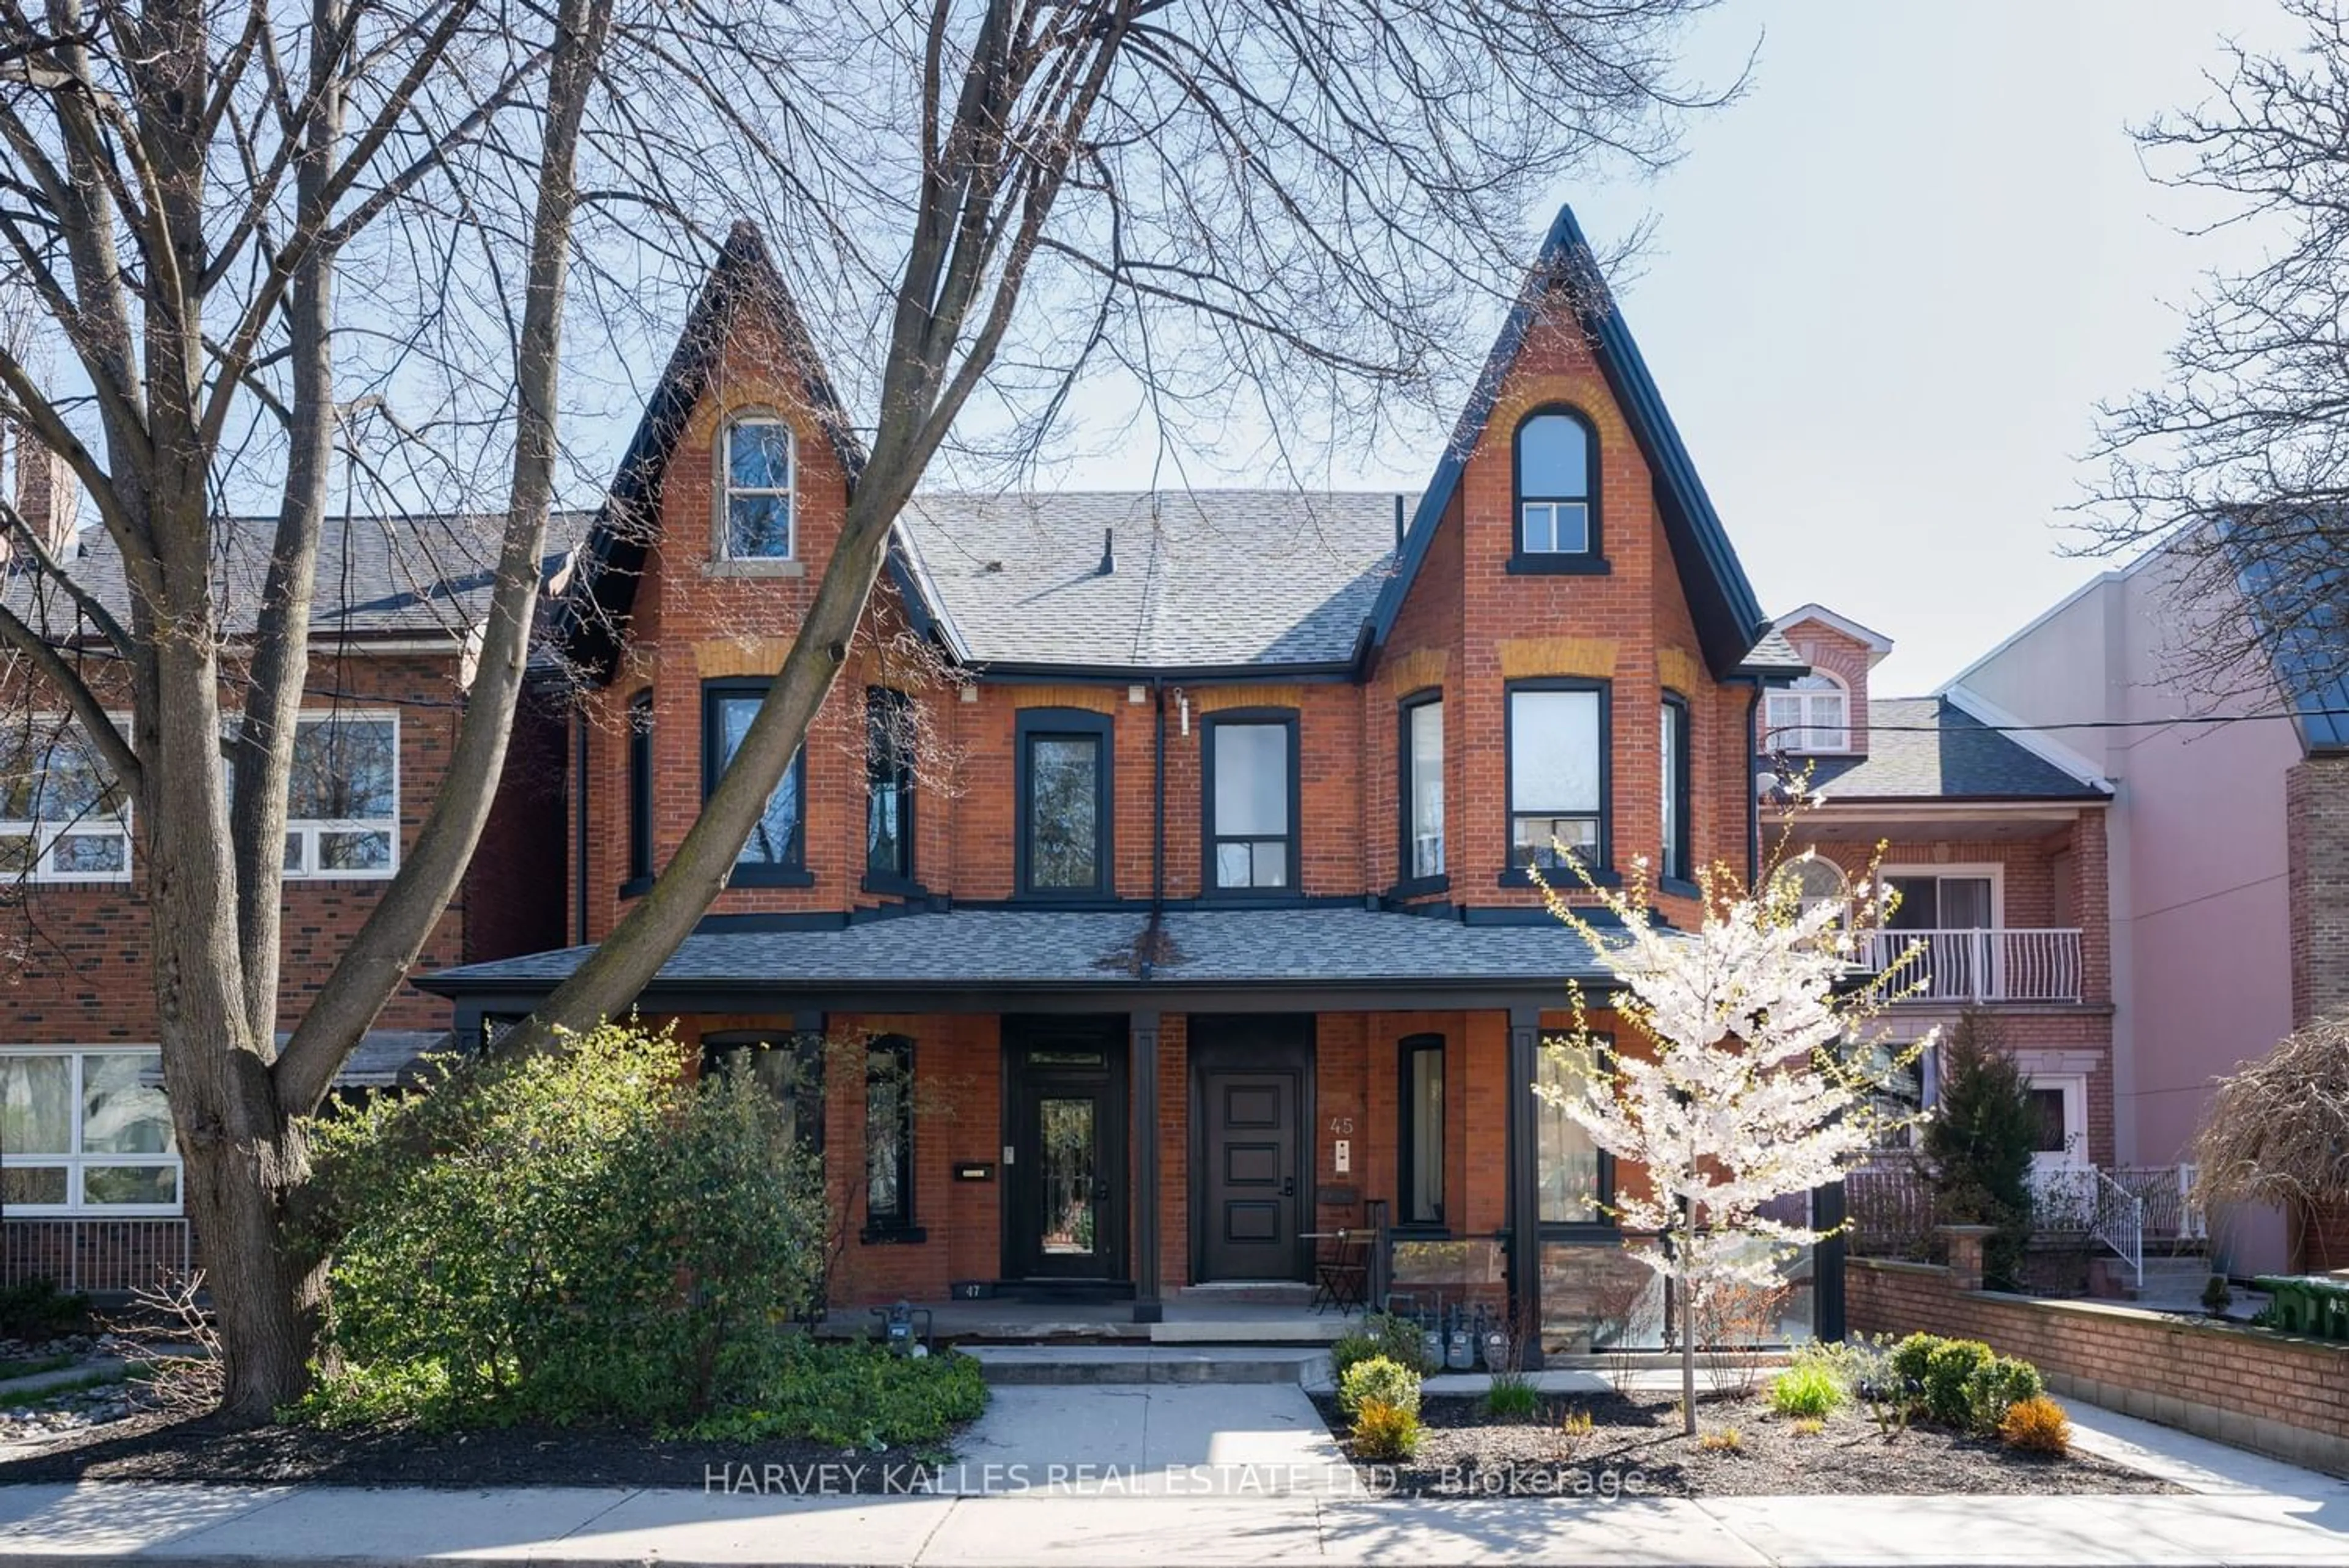 Home with brick exterior material for 45 Northcote Ave, Toronto Ontario M6J 3K2